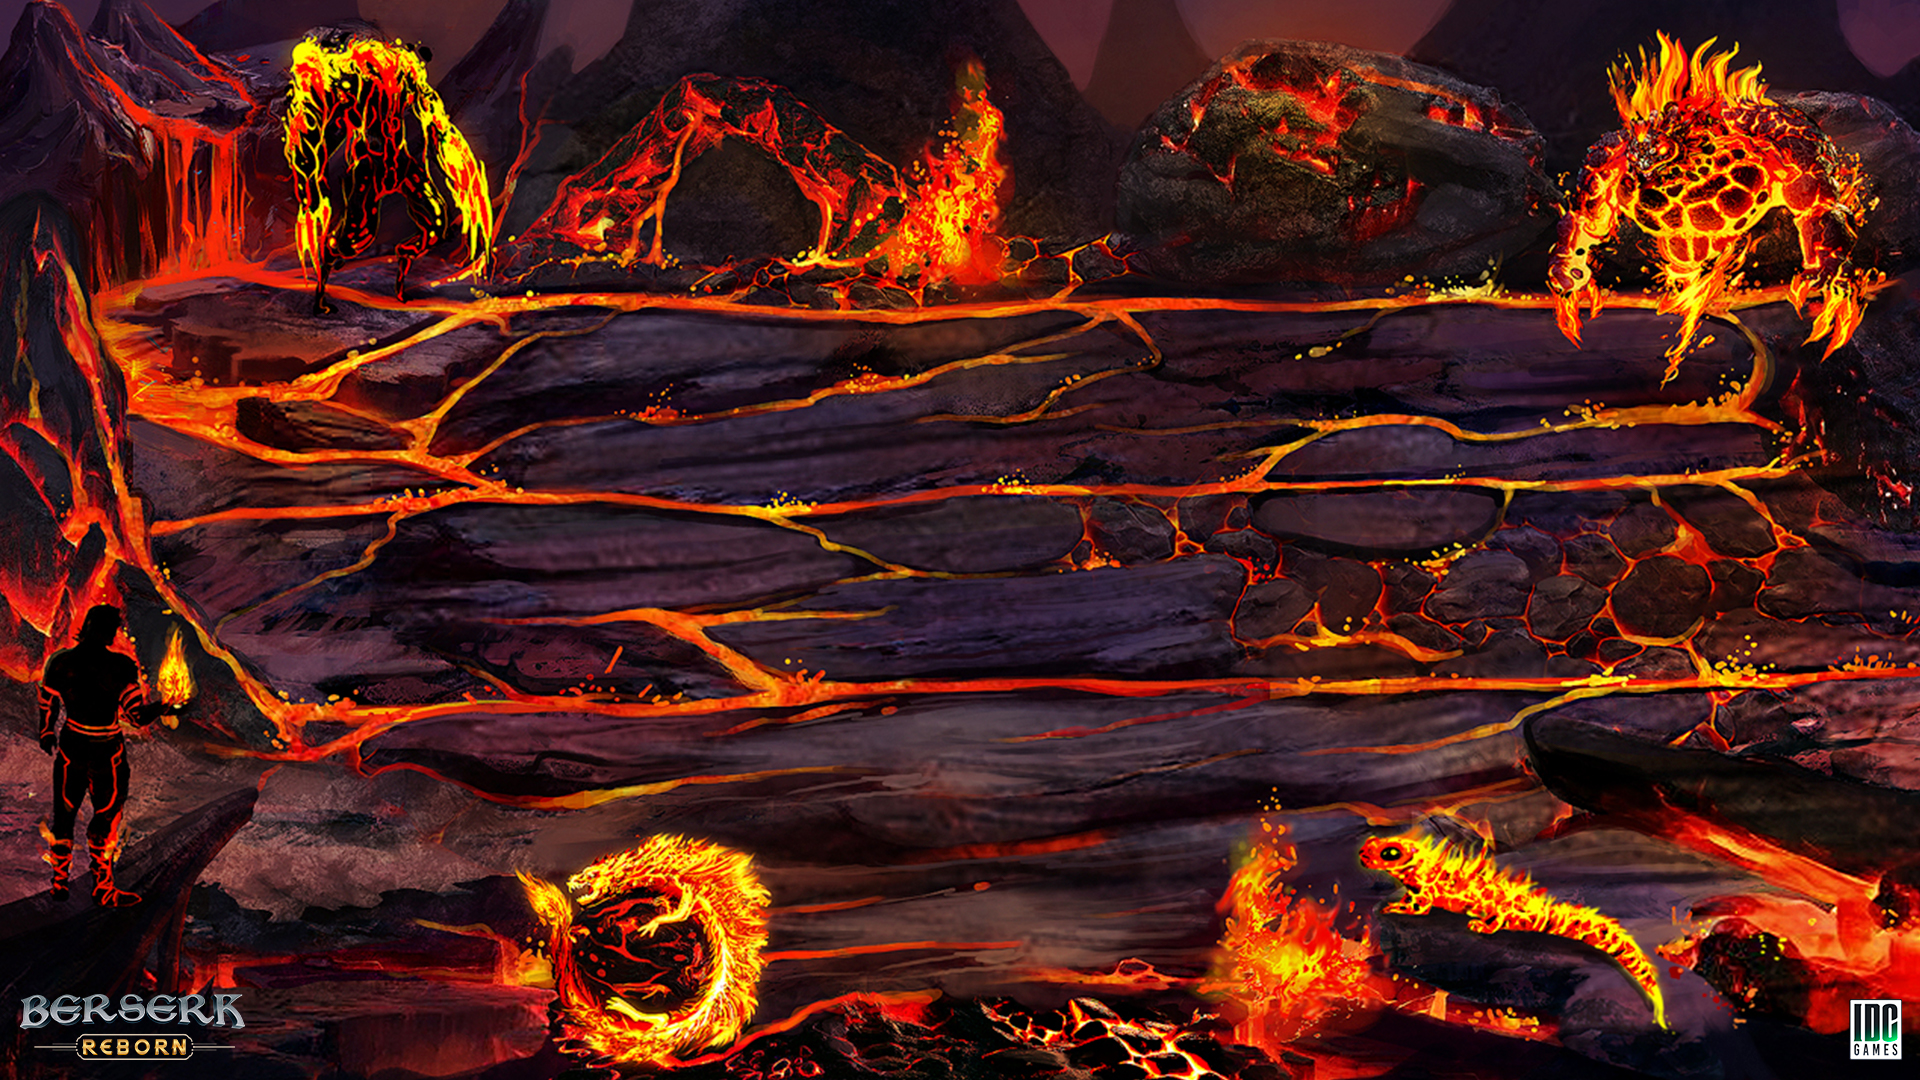 Berserk Reborn - Fire Wallpaper